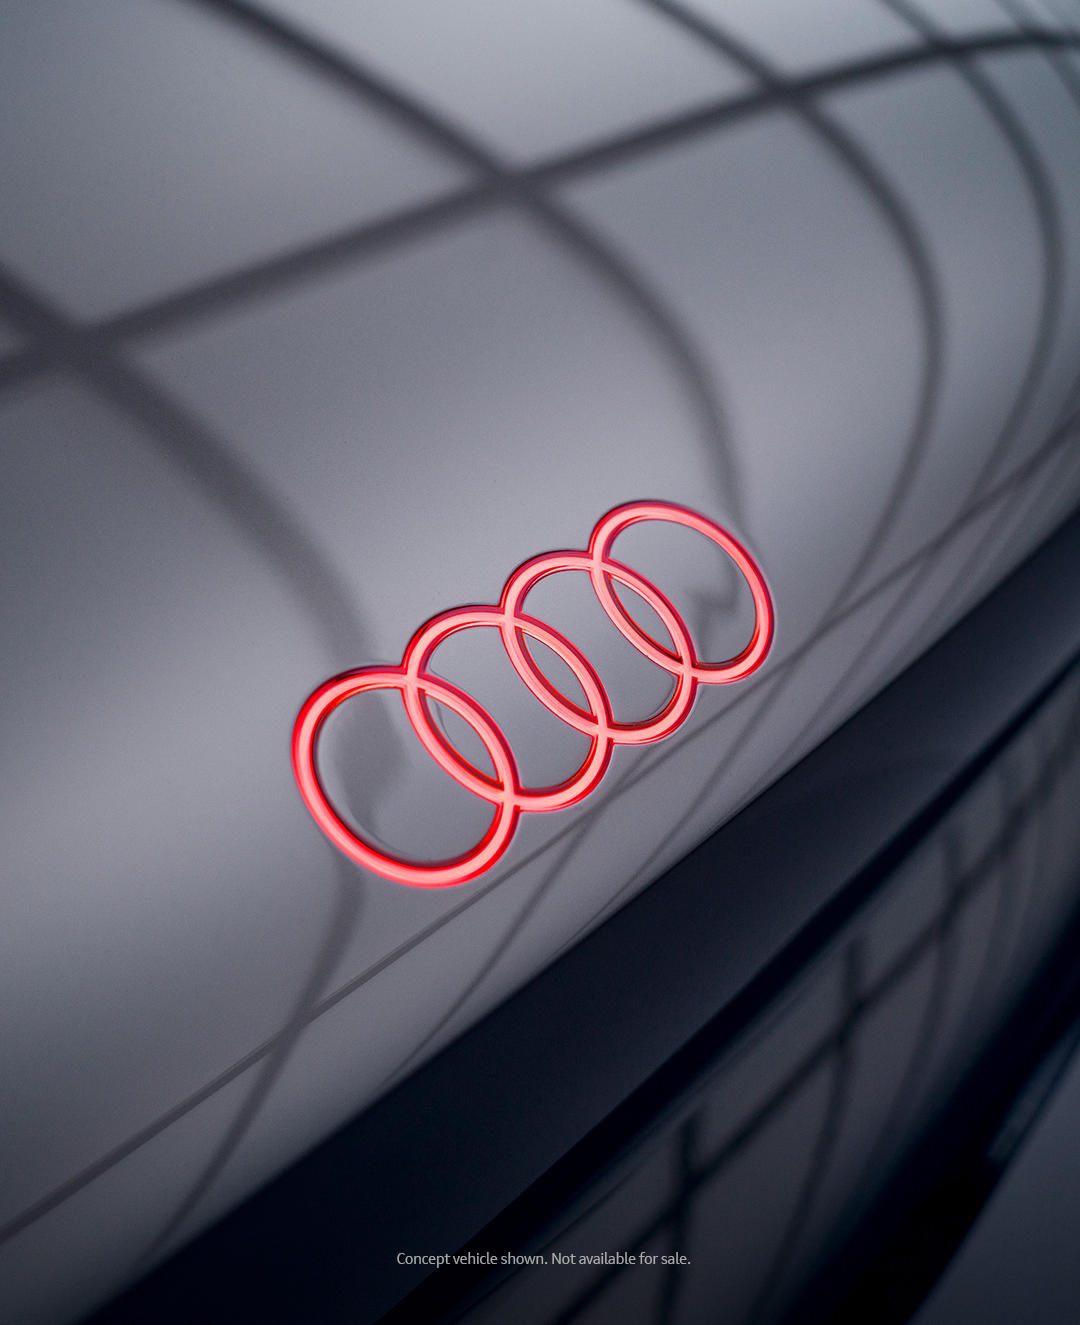 Audi USA - Discover the future of premium mobility this holiday season